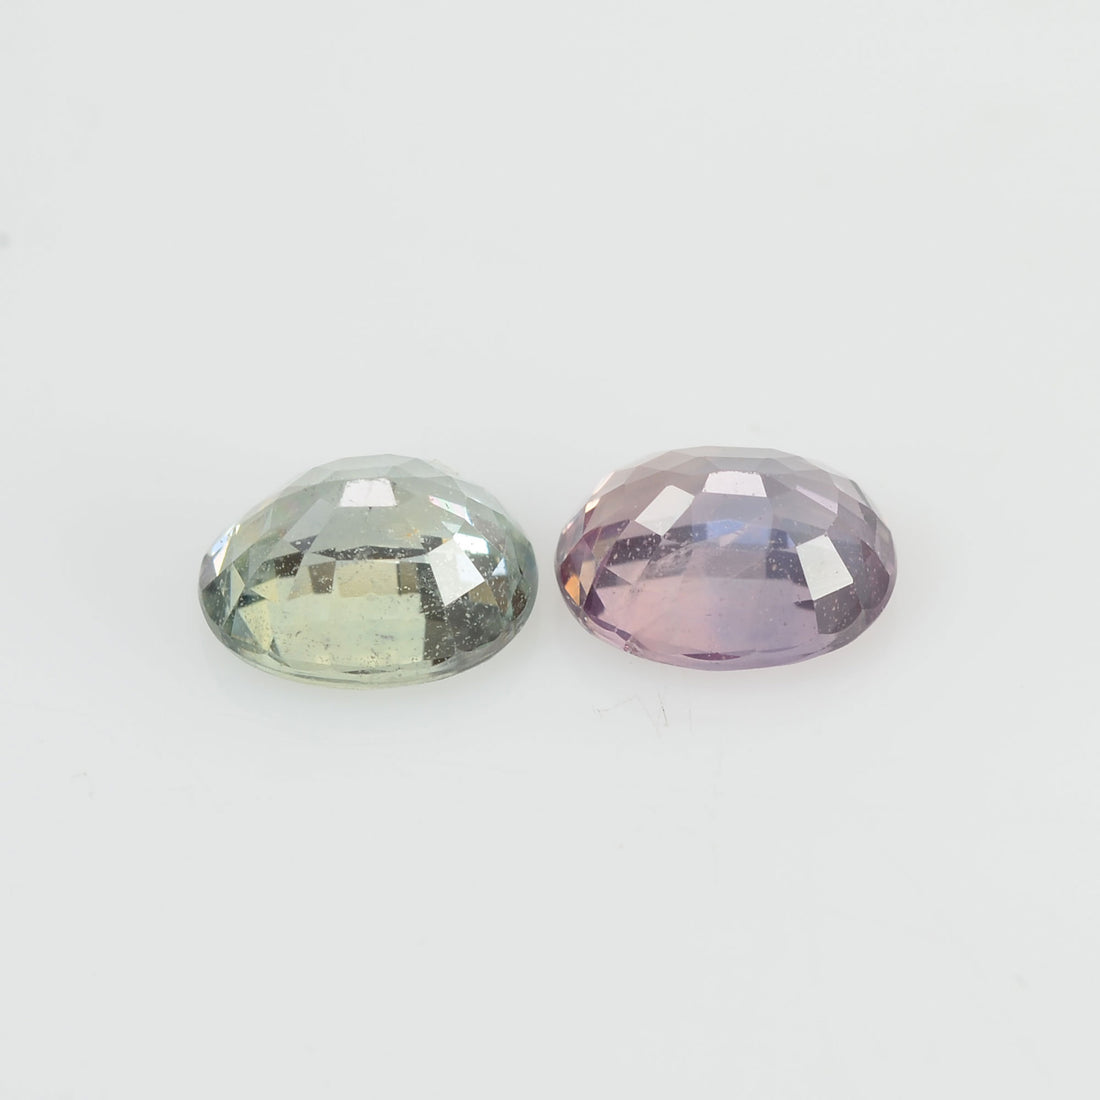 1.84 cts Natural Fancy Sapphire Loose Pair Gemstone Oval Cut - Thai Gems Export Ltd.